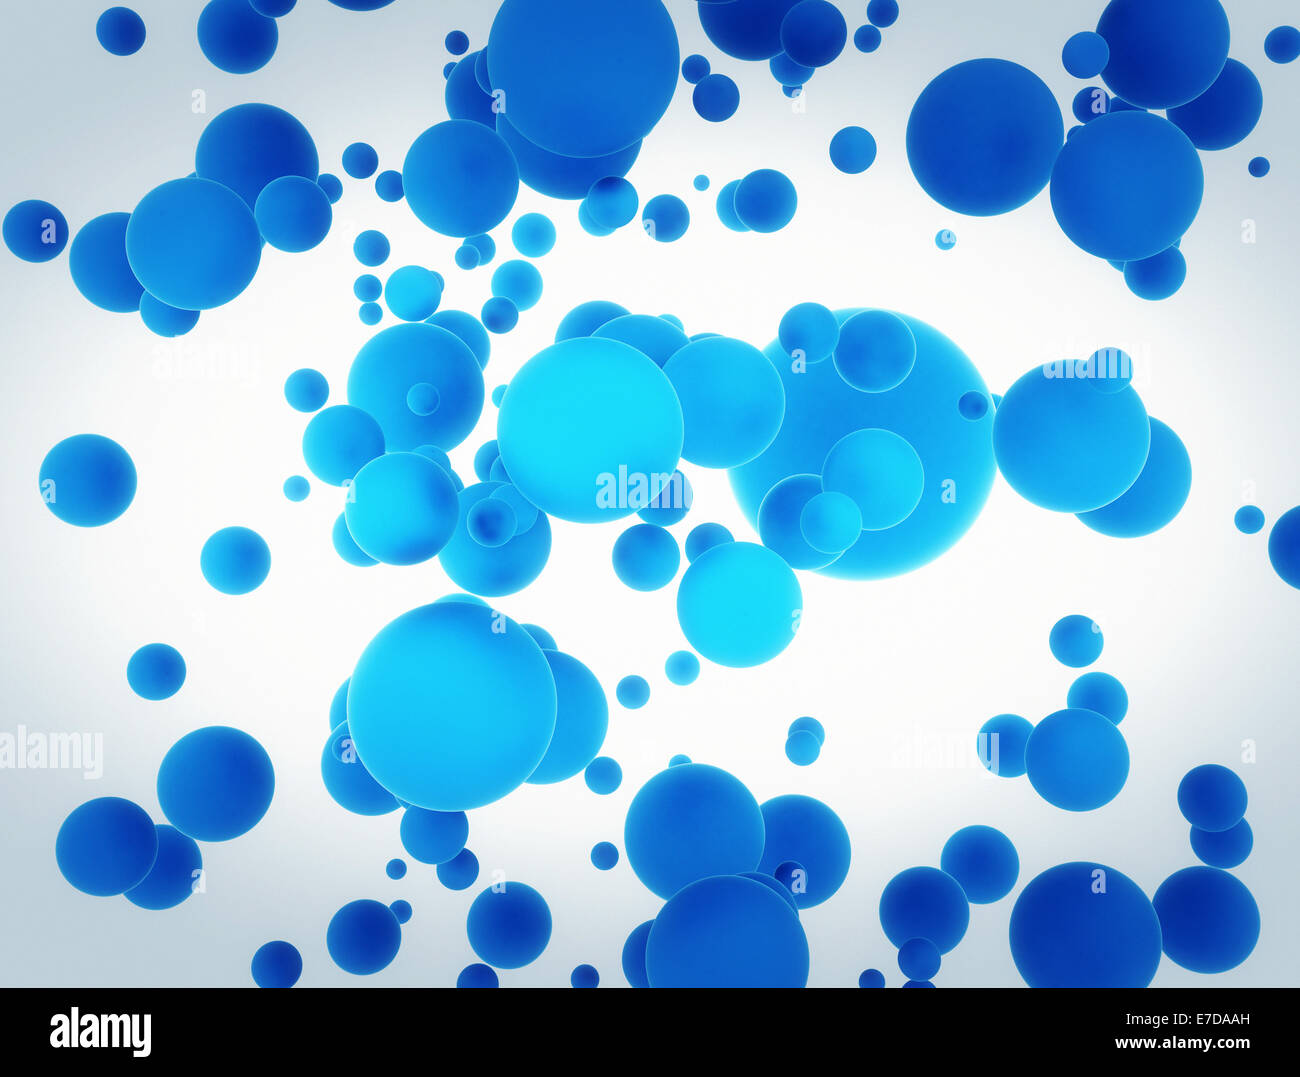 Abstract flottante sfere blu Foto Stock